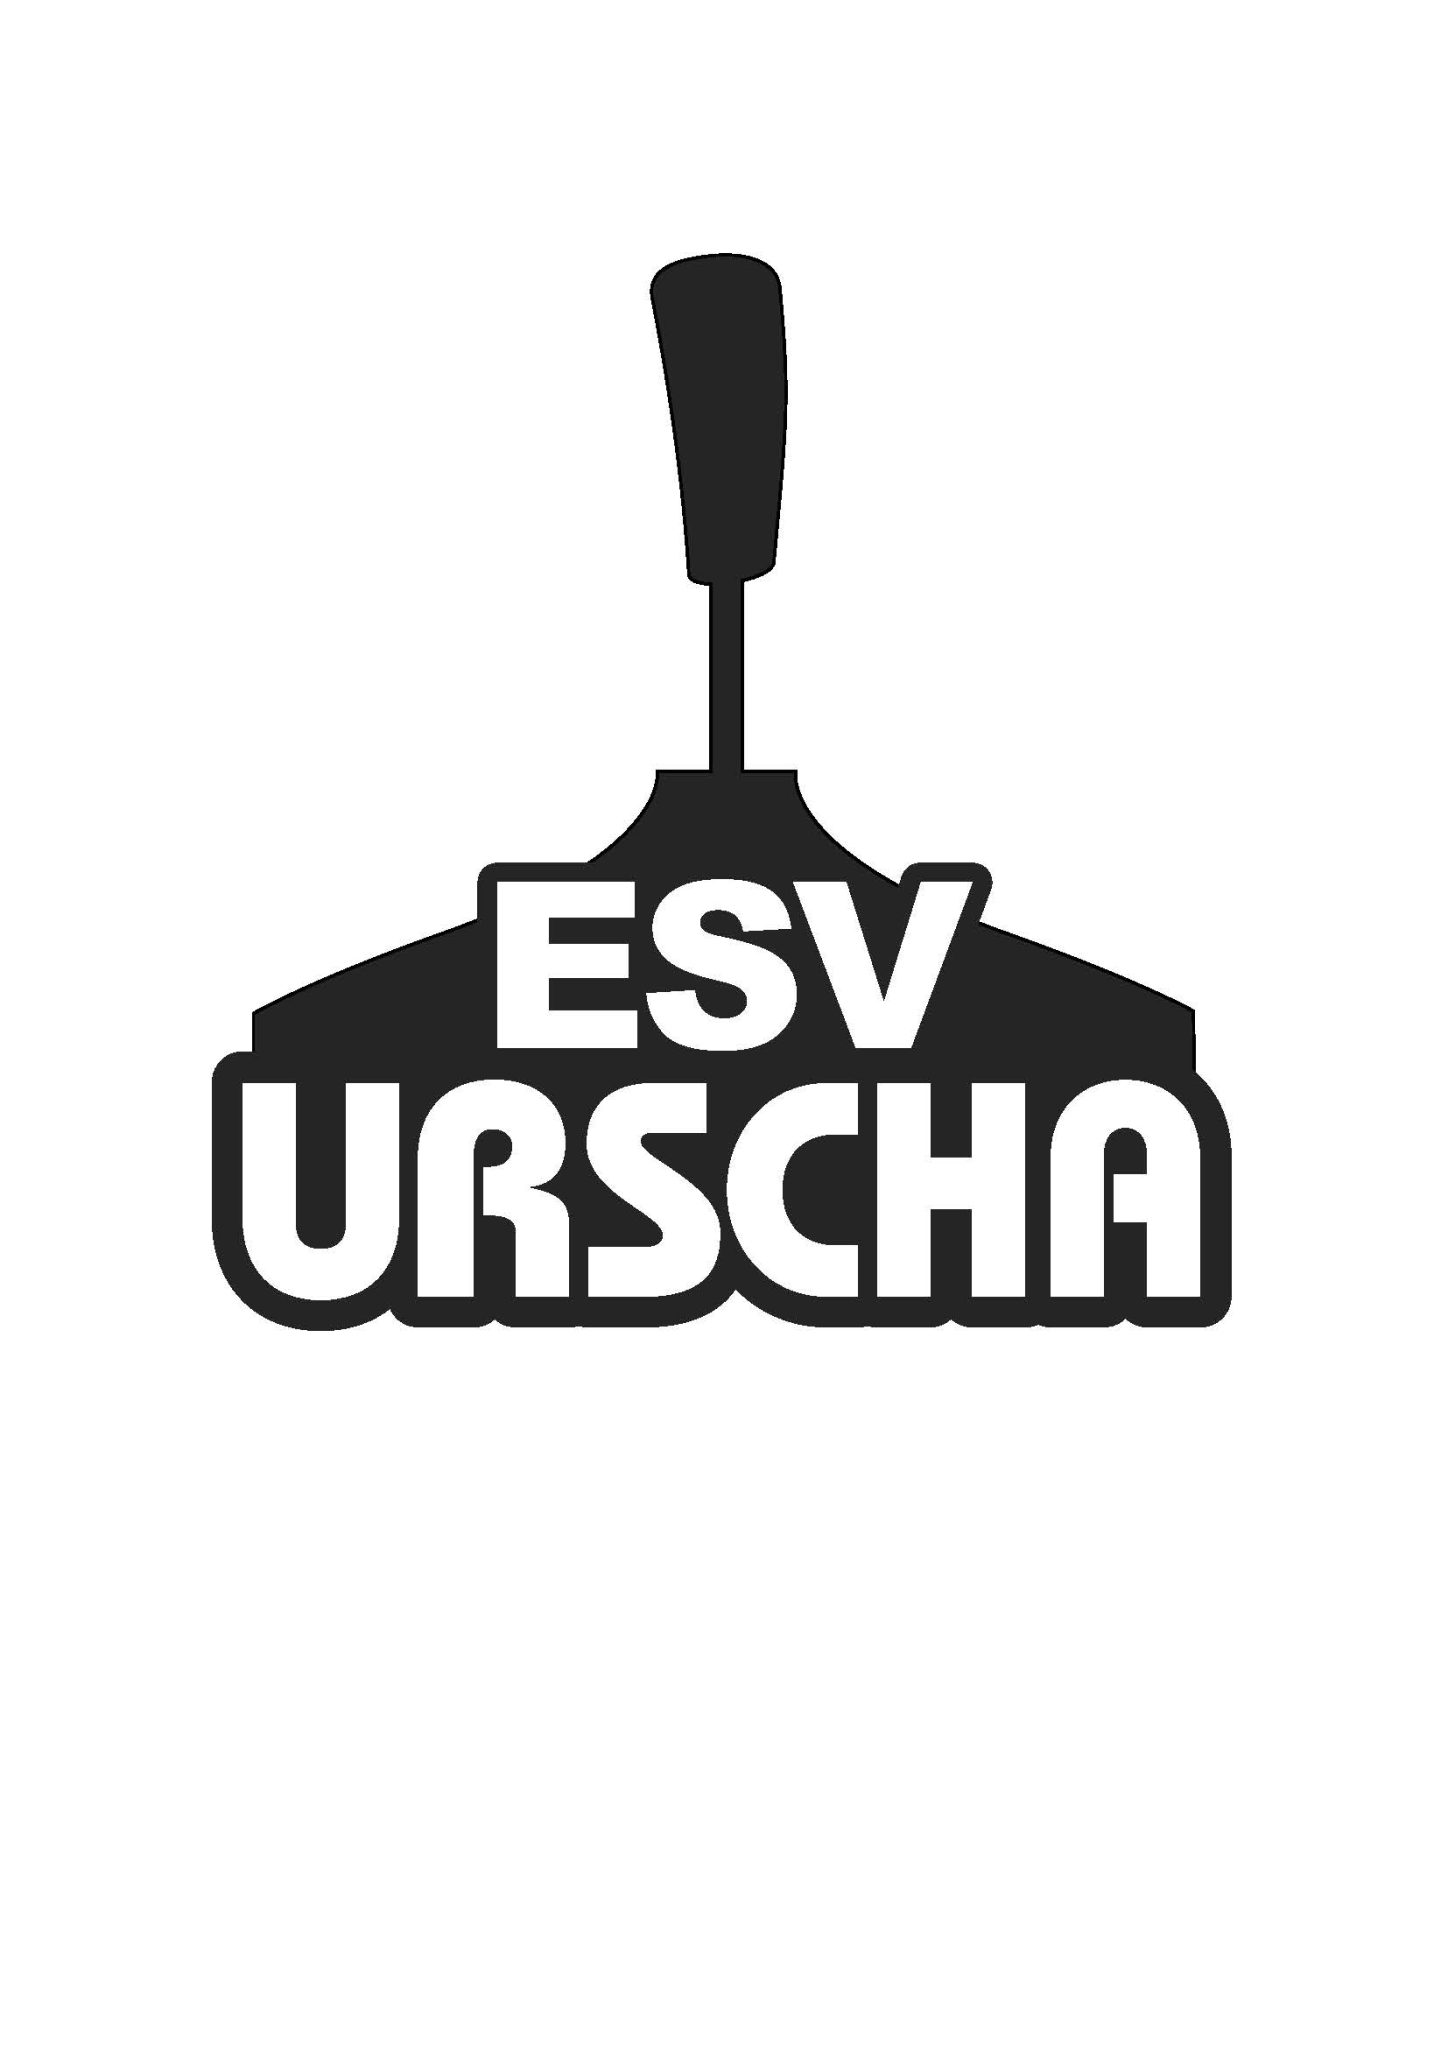 ESV Urscha (ST)